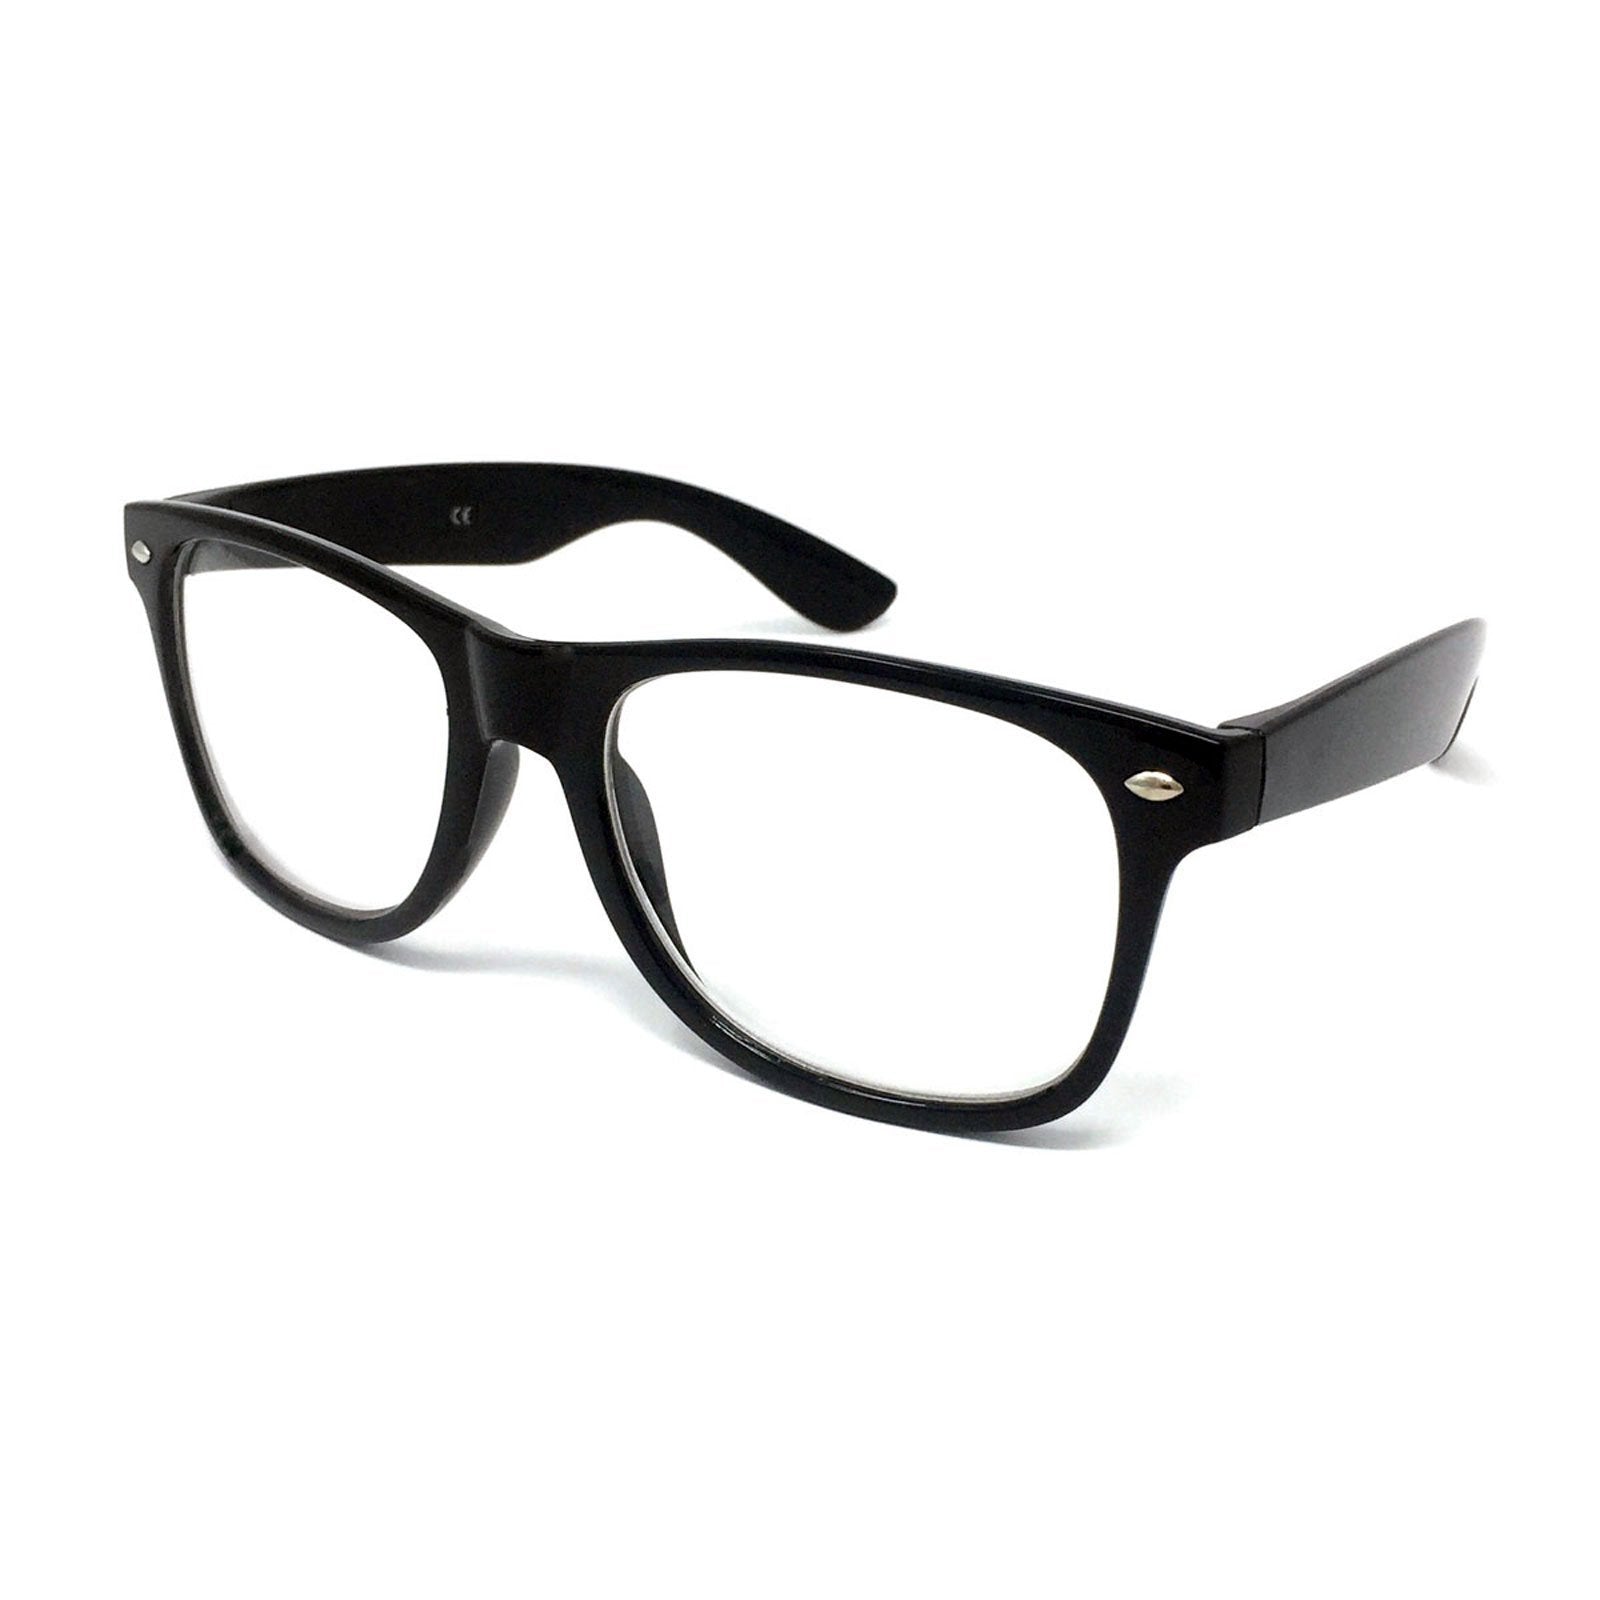 Wholesale Kids Classic Clear Lens Glasses - Black Frame